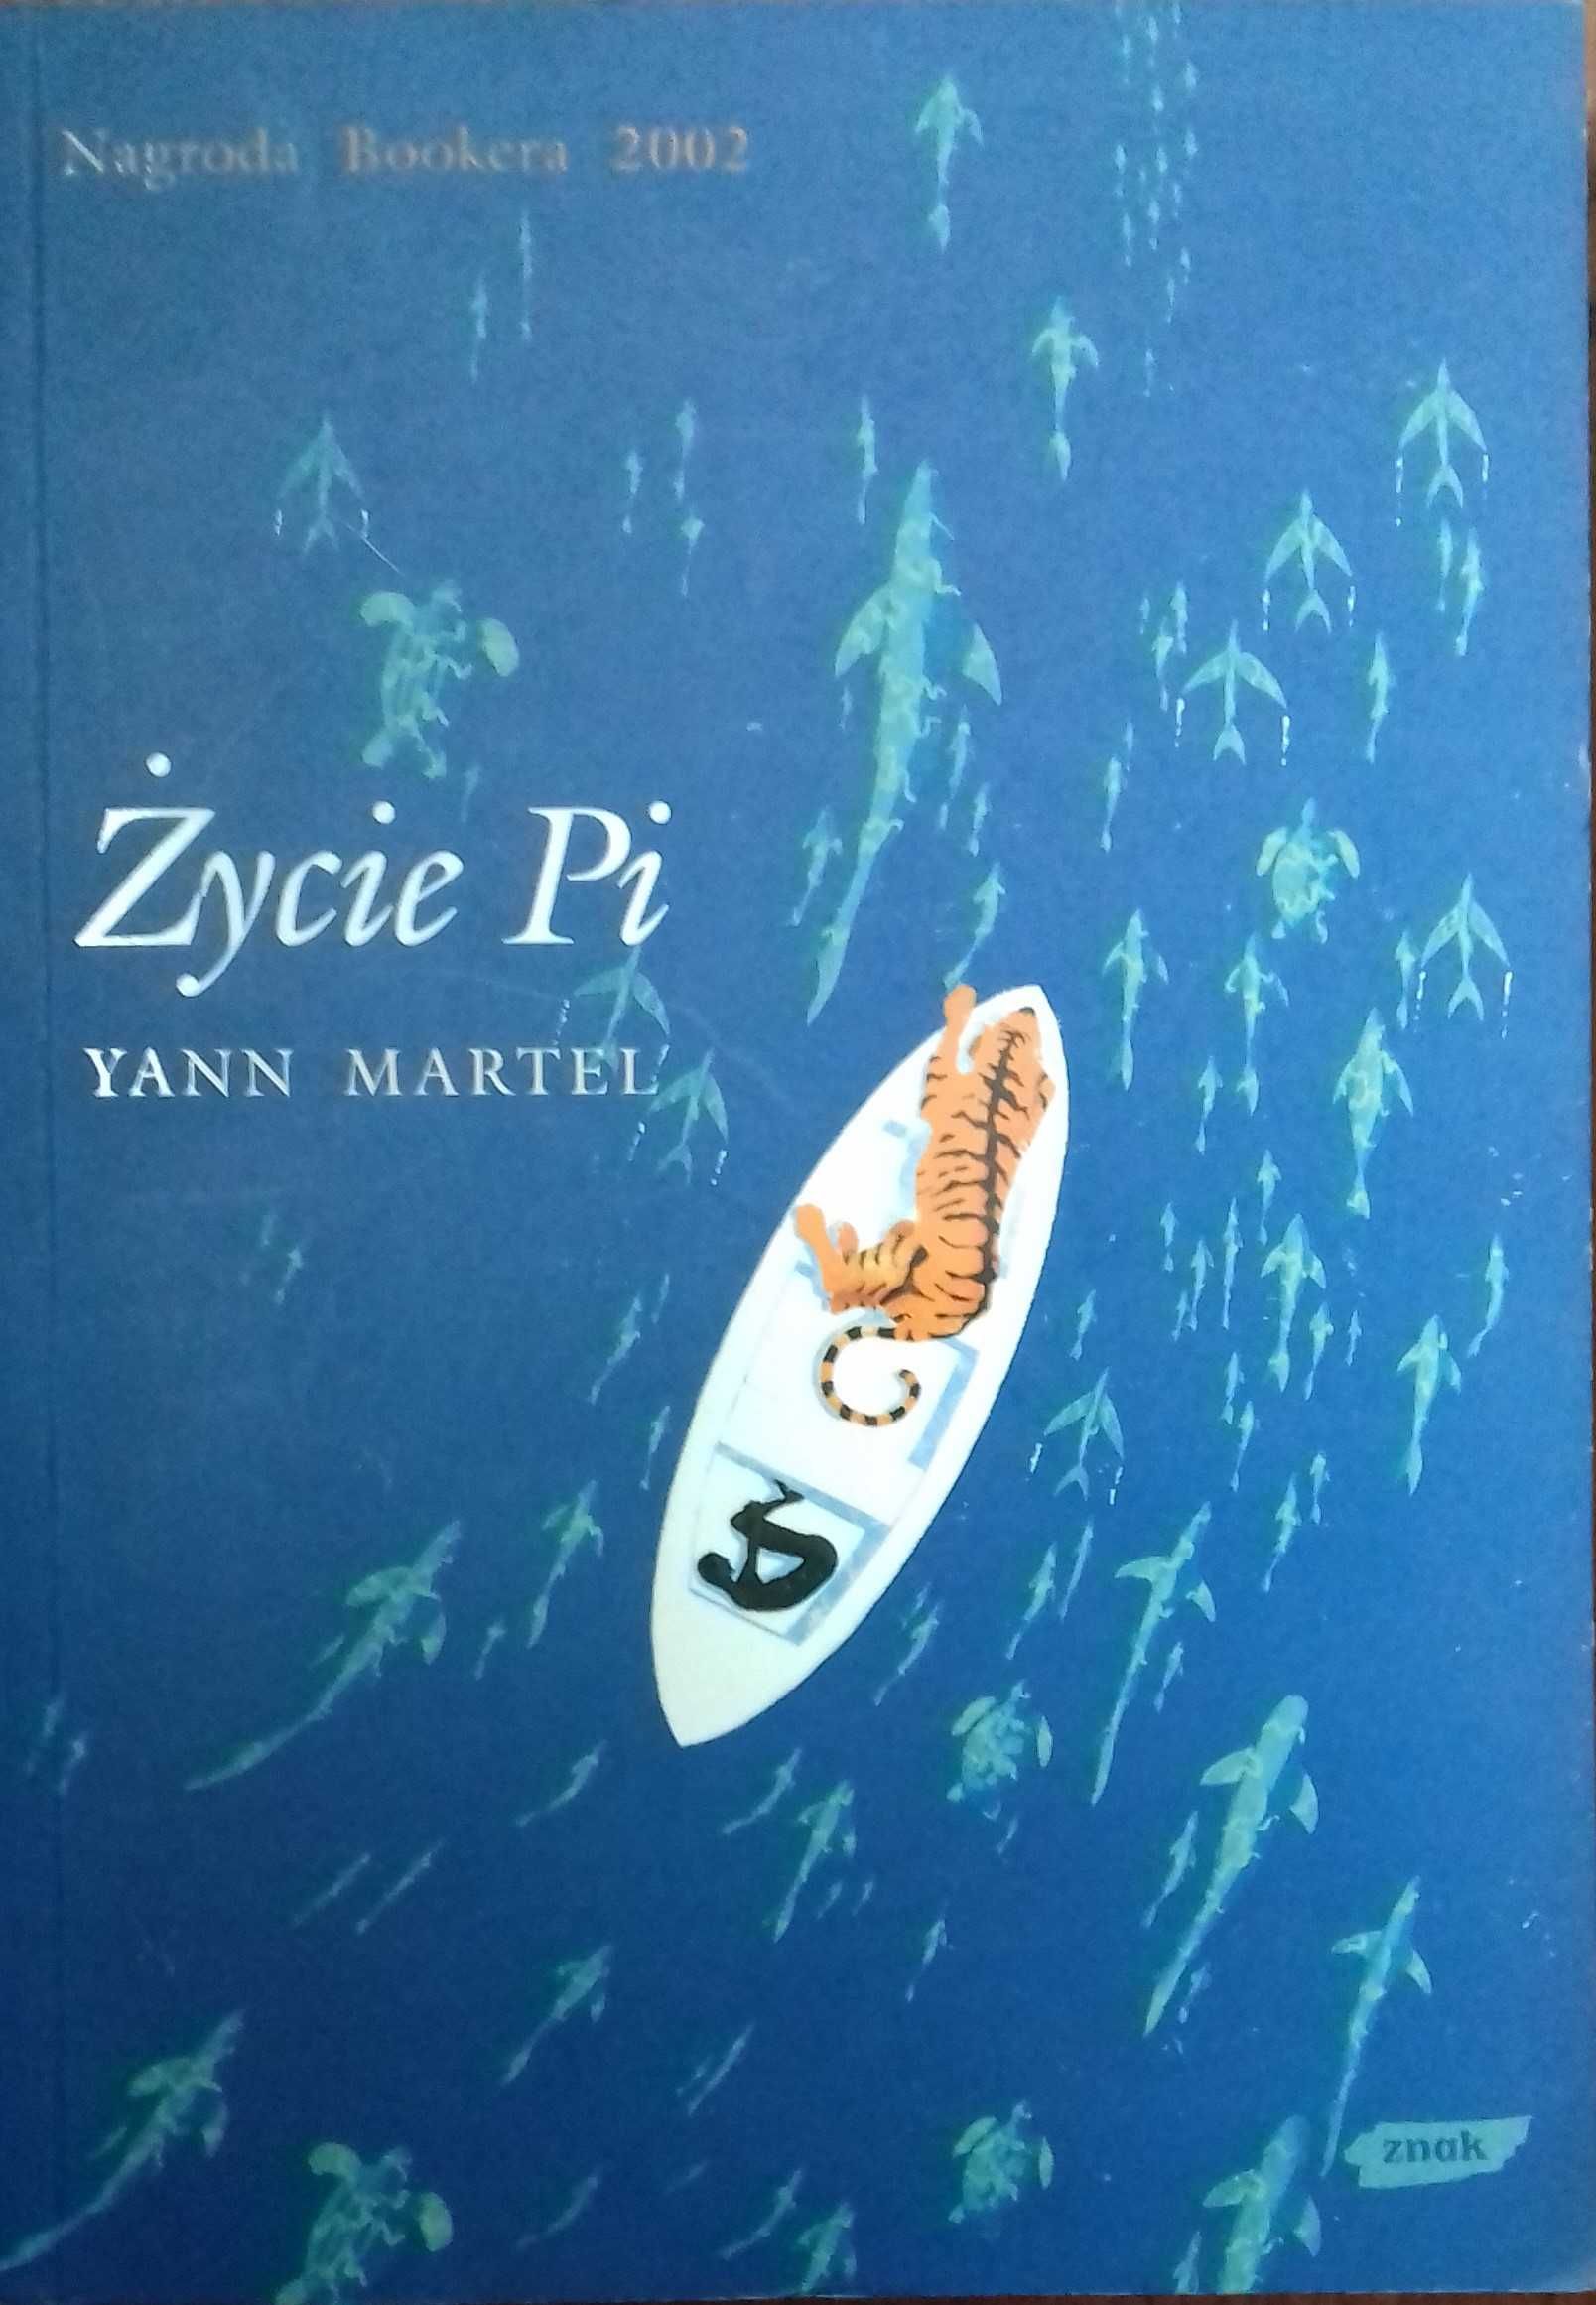 Życie Pi - Yann Martel